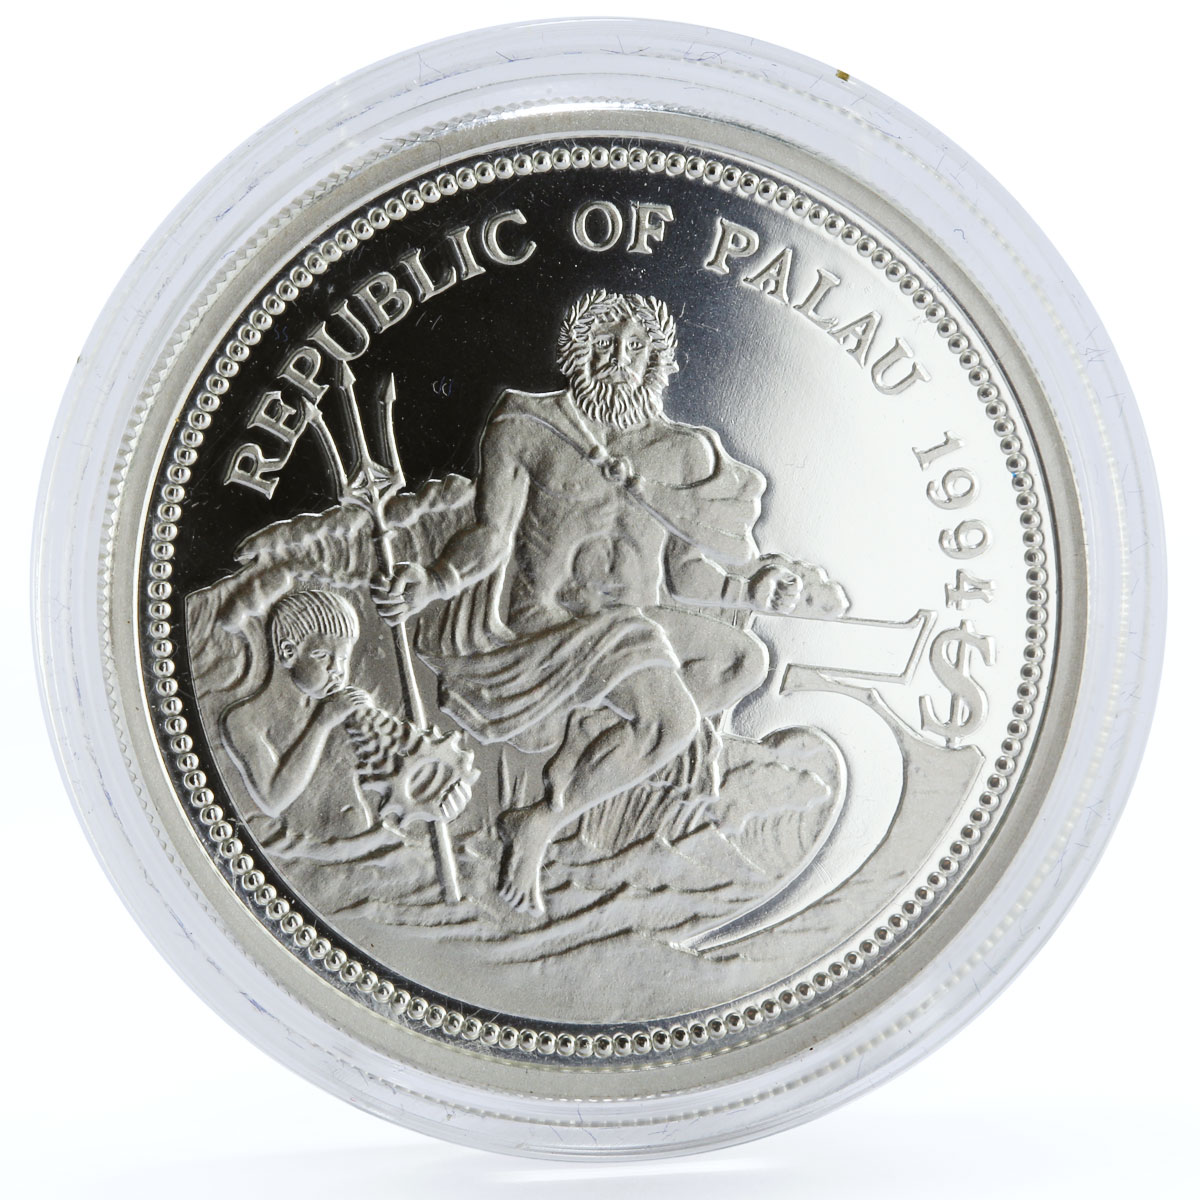 Palau 5 dollars Marine Life Protection series Fish Ocean Scene silver coin 1994